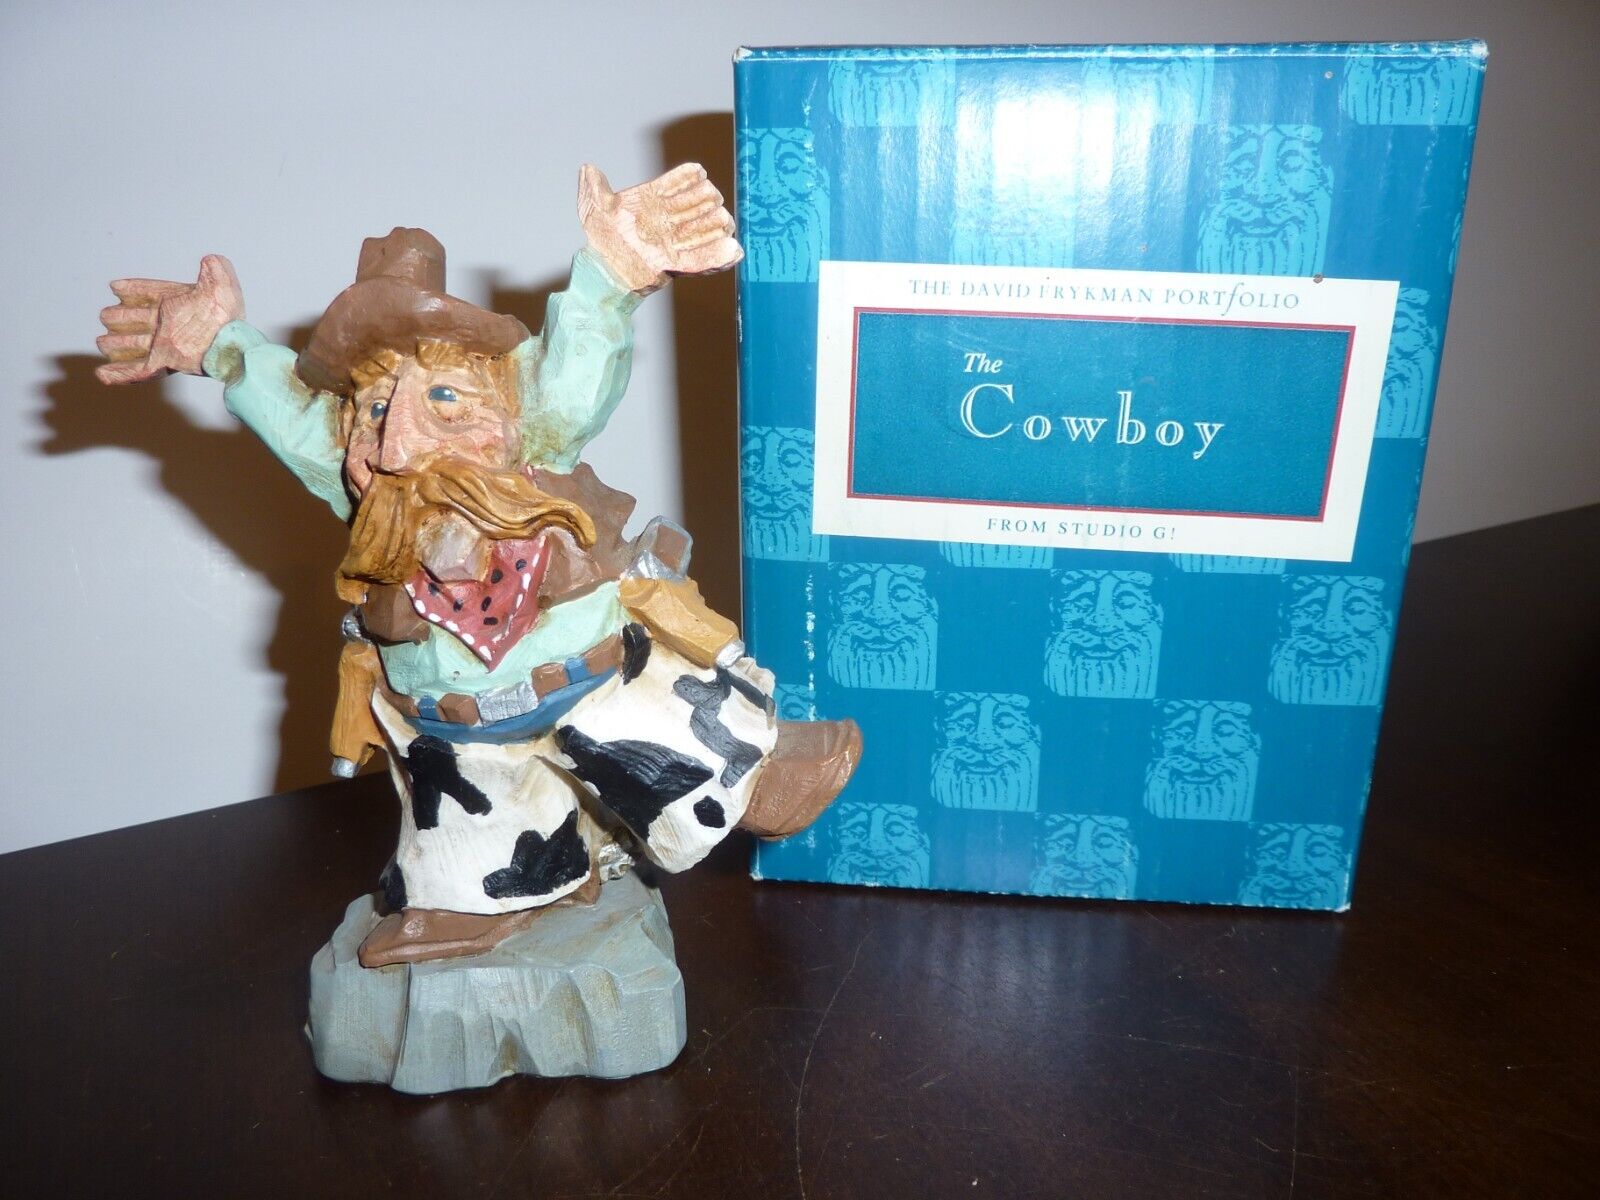 David Frykman DF 3092 The Cowboy figurine - 1996